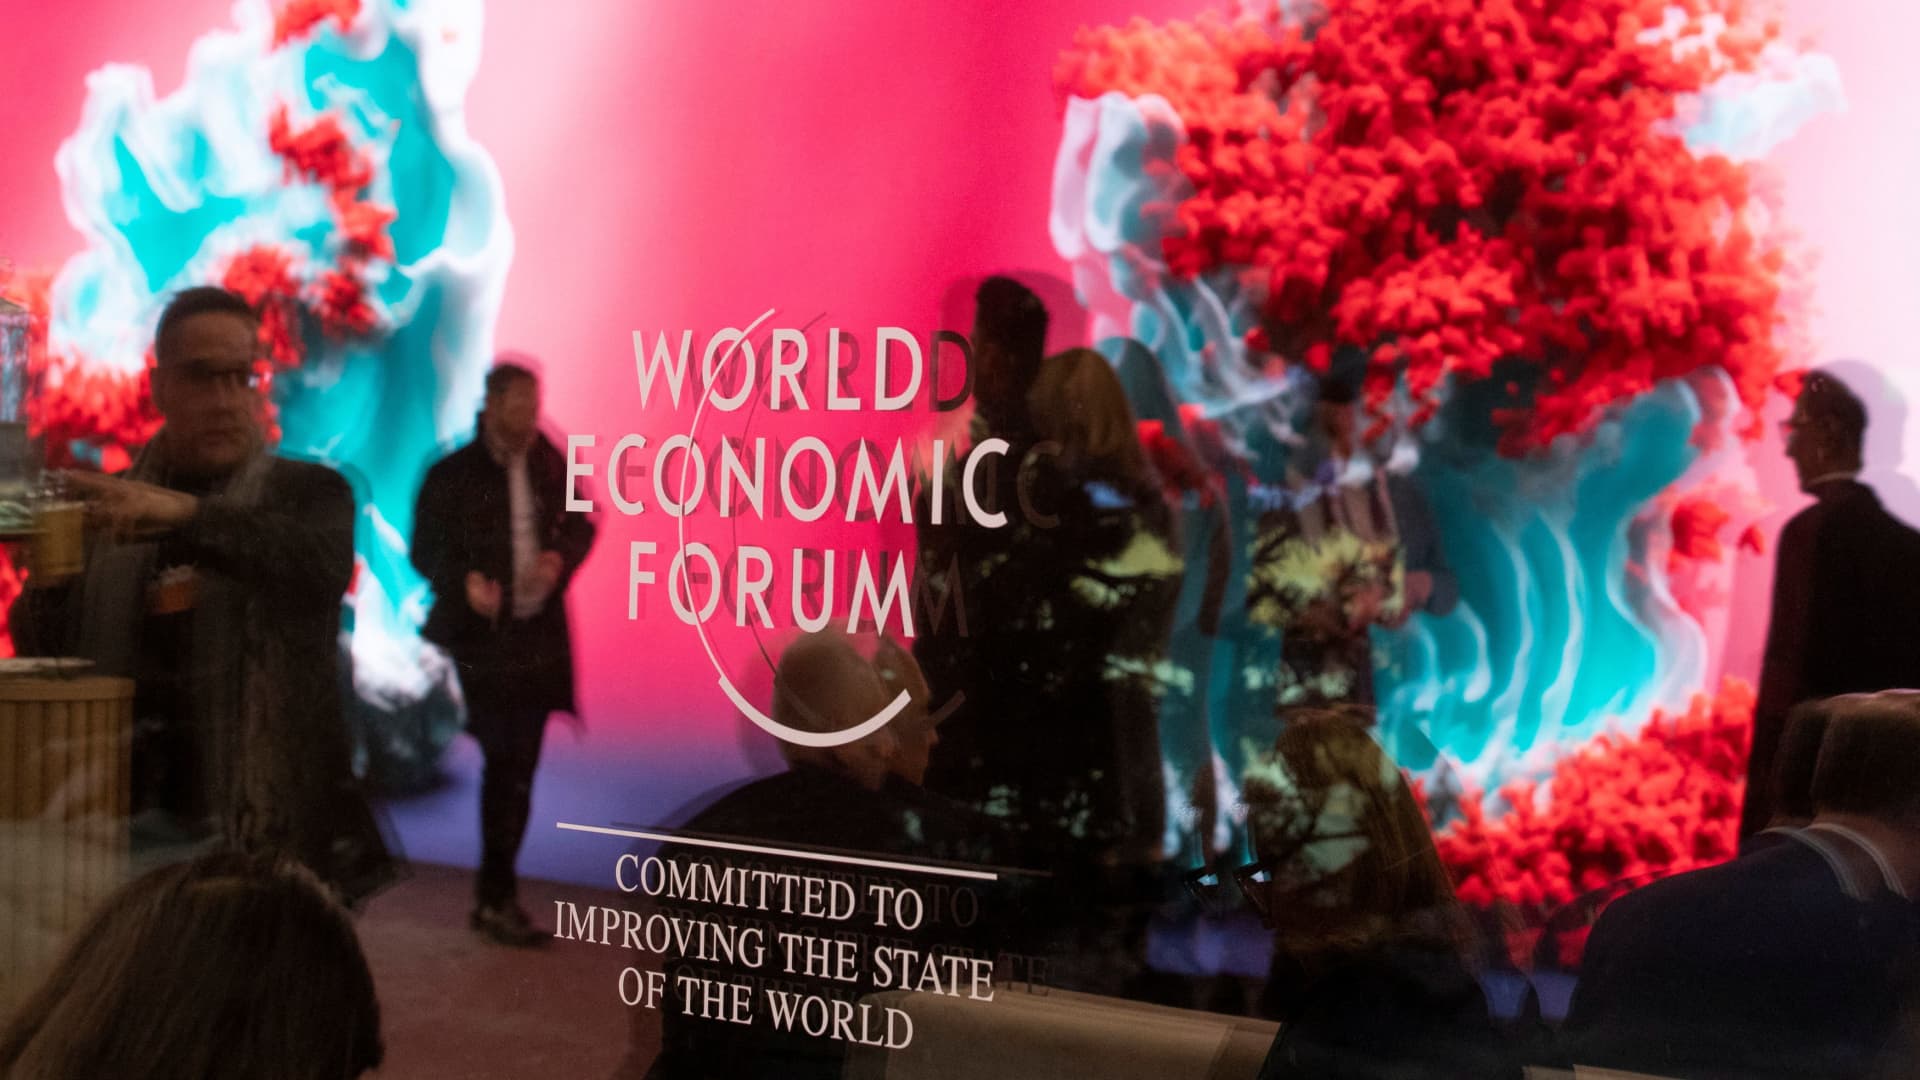 Saham, data, pendapatan, dan berita Forum Ekonomi Dunia